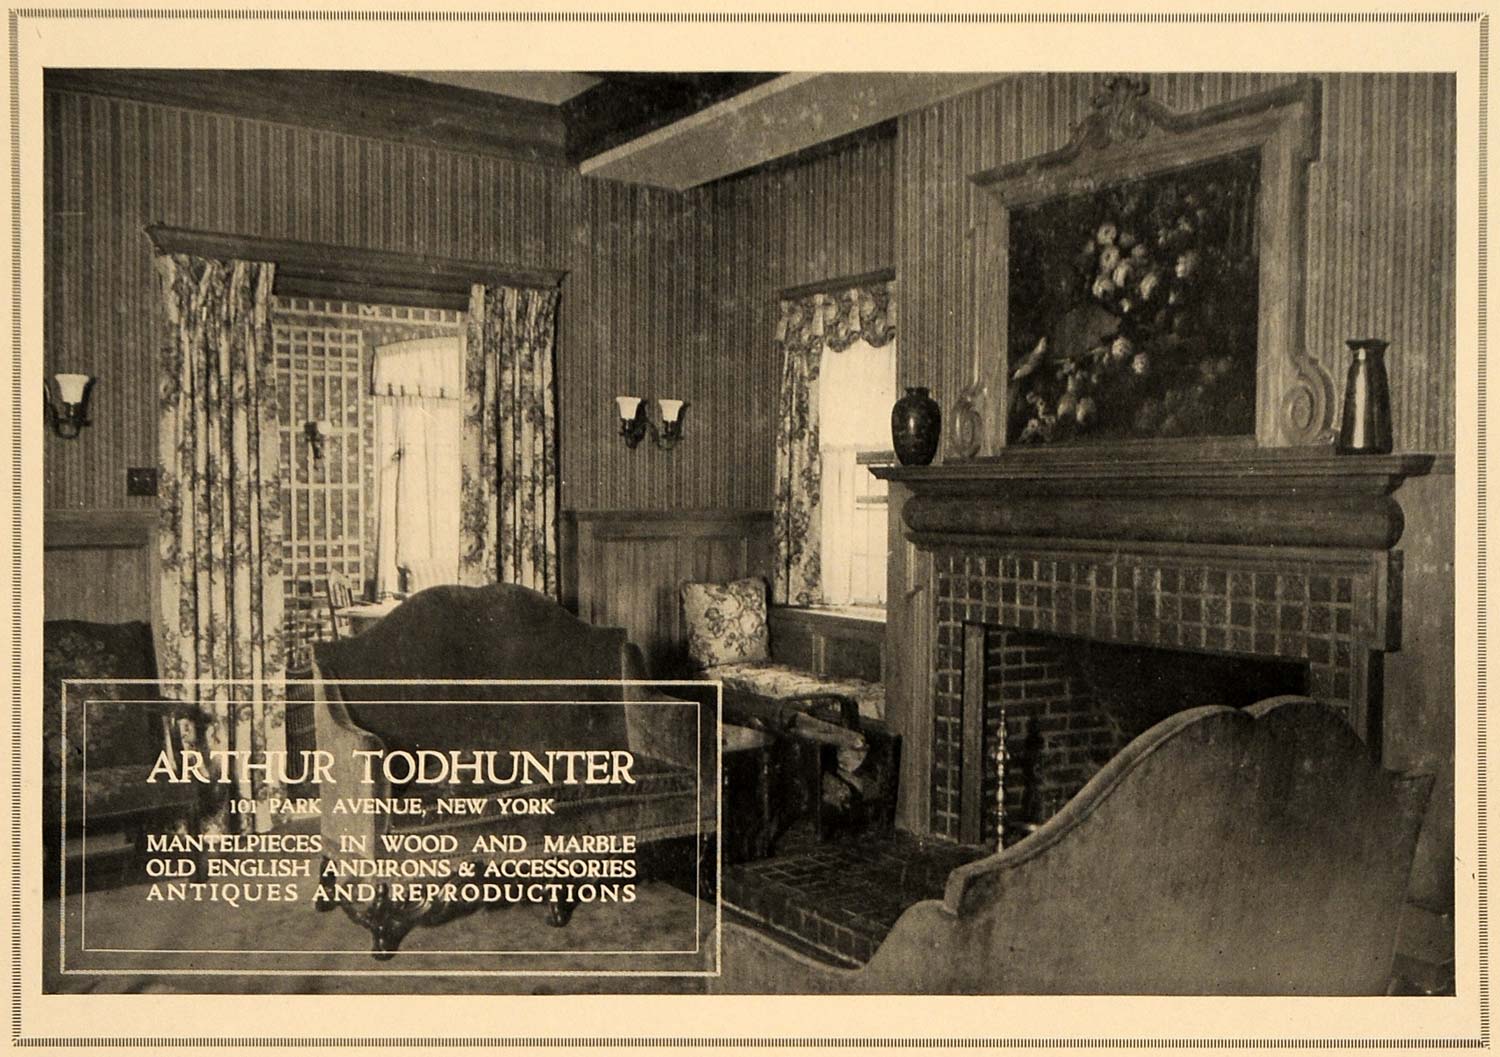 1919 Ad Arthur Todhunter Wood Marble Mantel Pieces - ORIGINAL ADVERTISING GF2